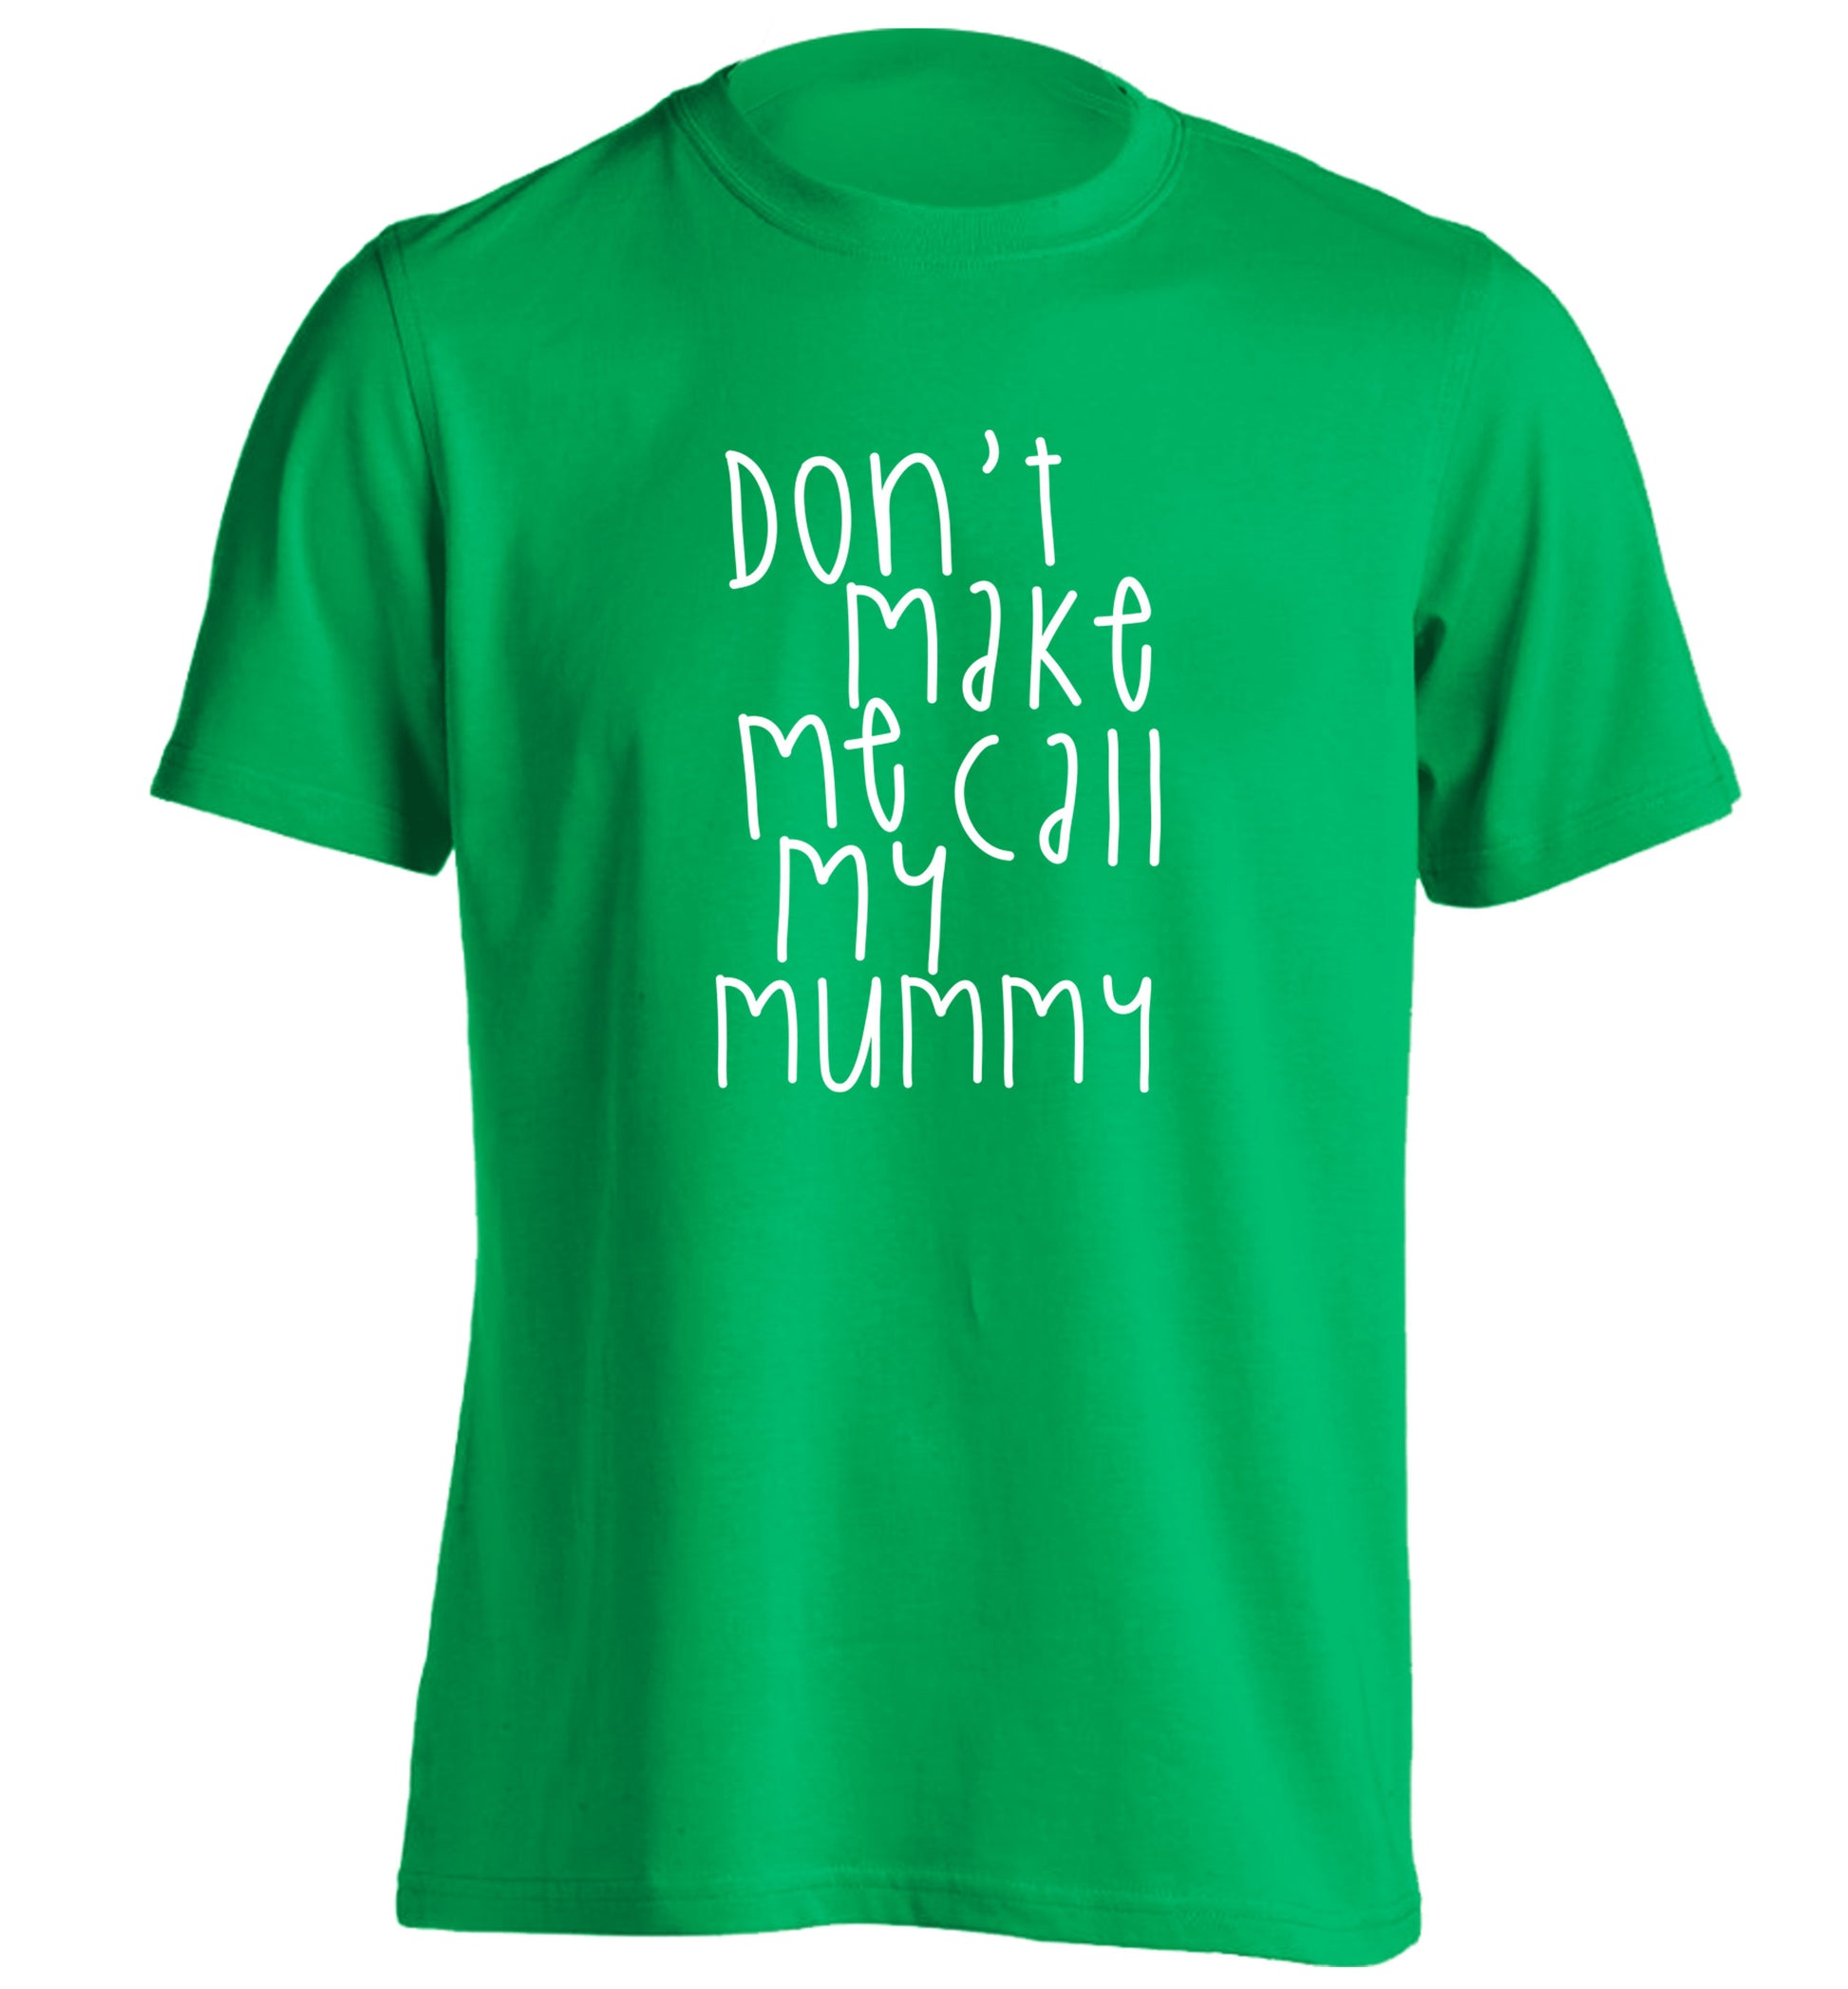 Don't make me call my mummy adults unisex green Tshirt 2XL